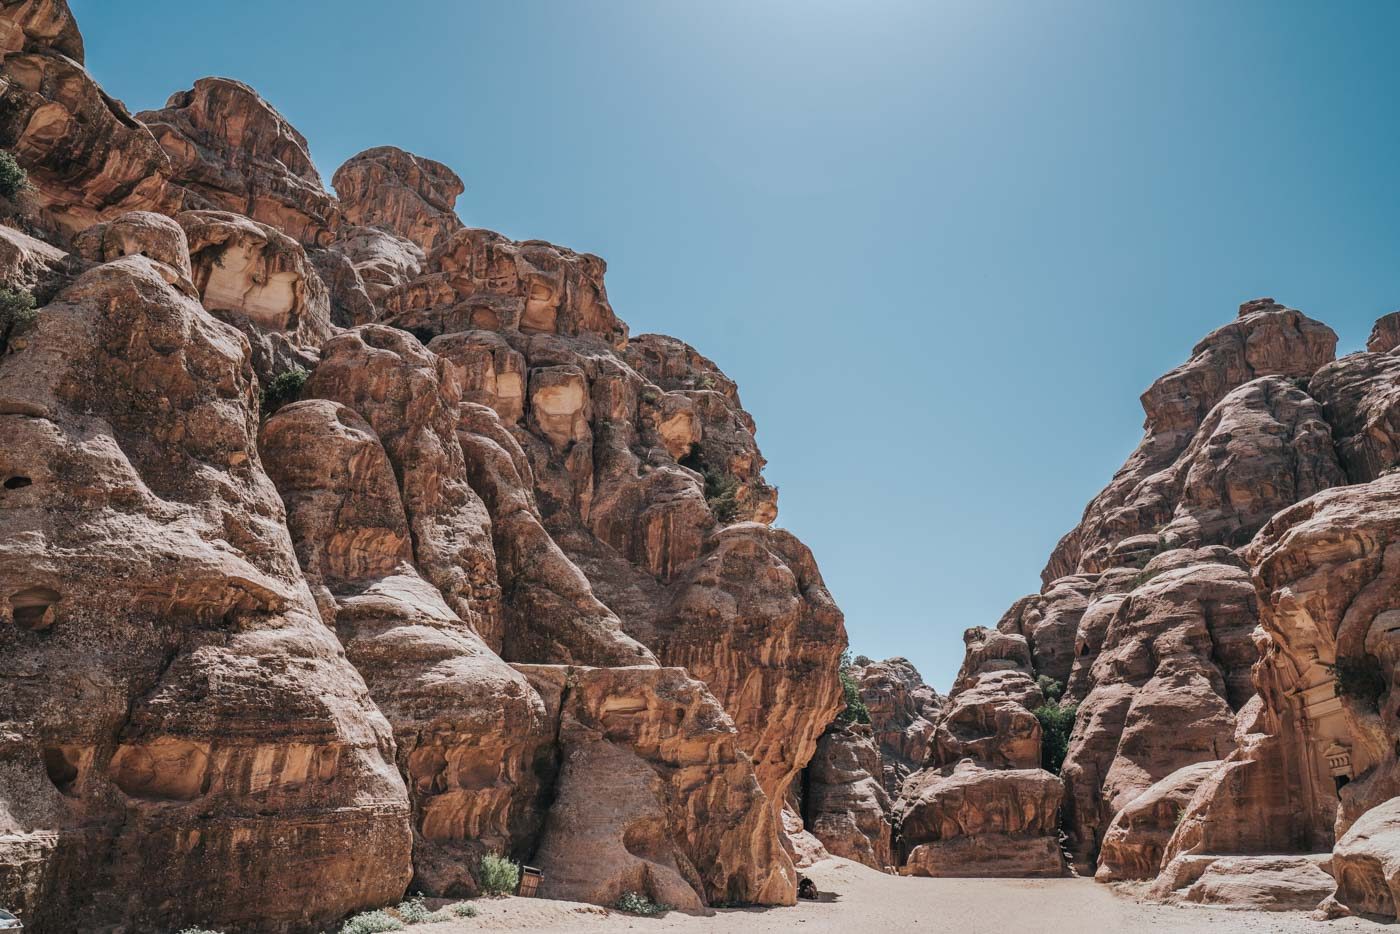 Jordan Tour: Entrance to Little Petra, Jordan